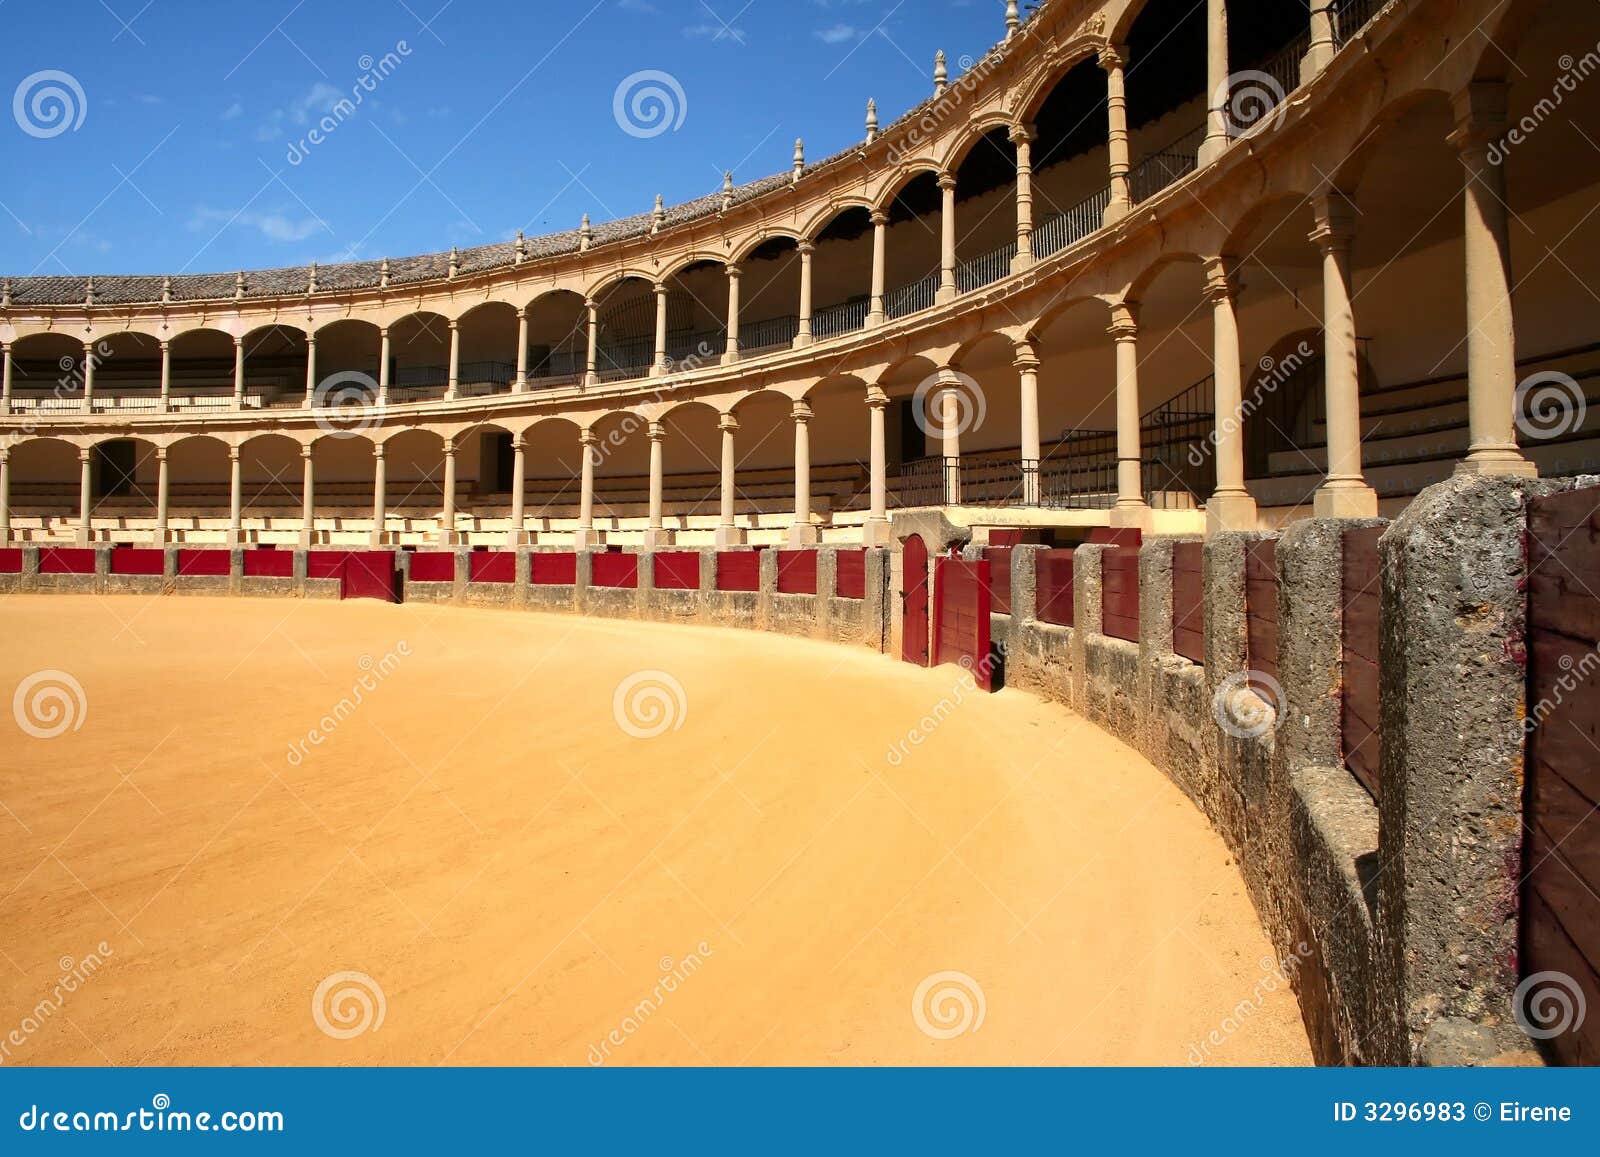 bullfighting arena in ronda